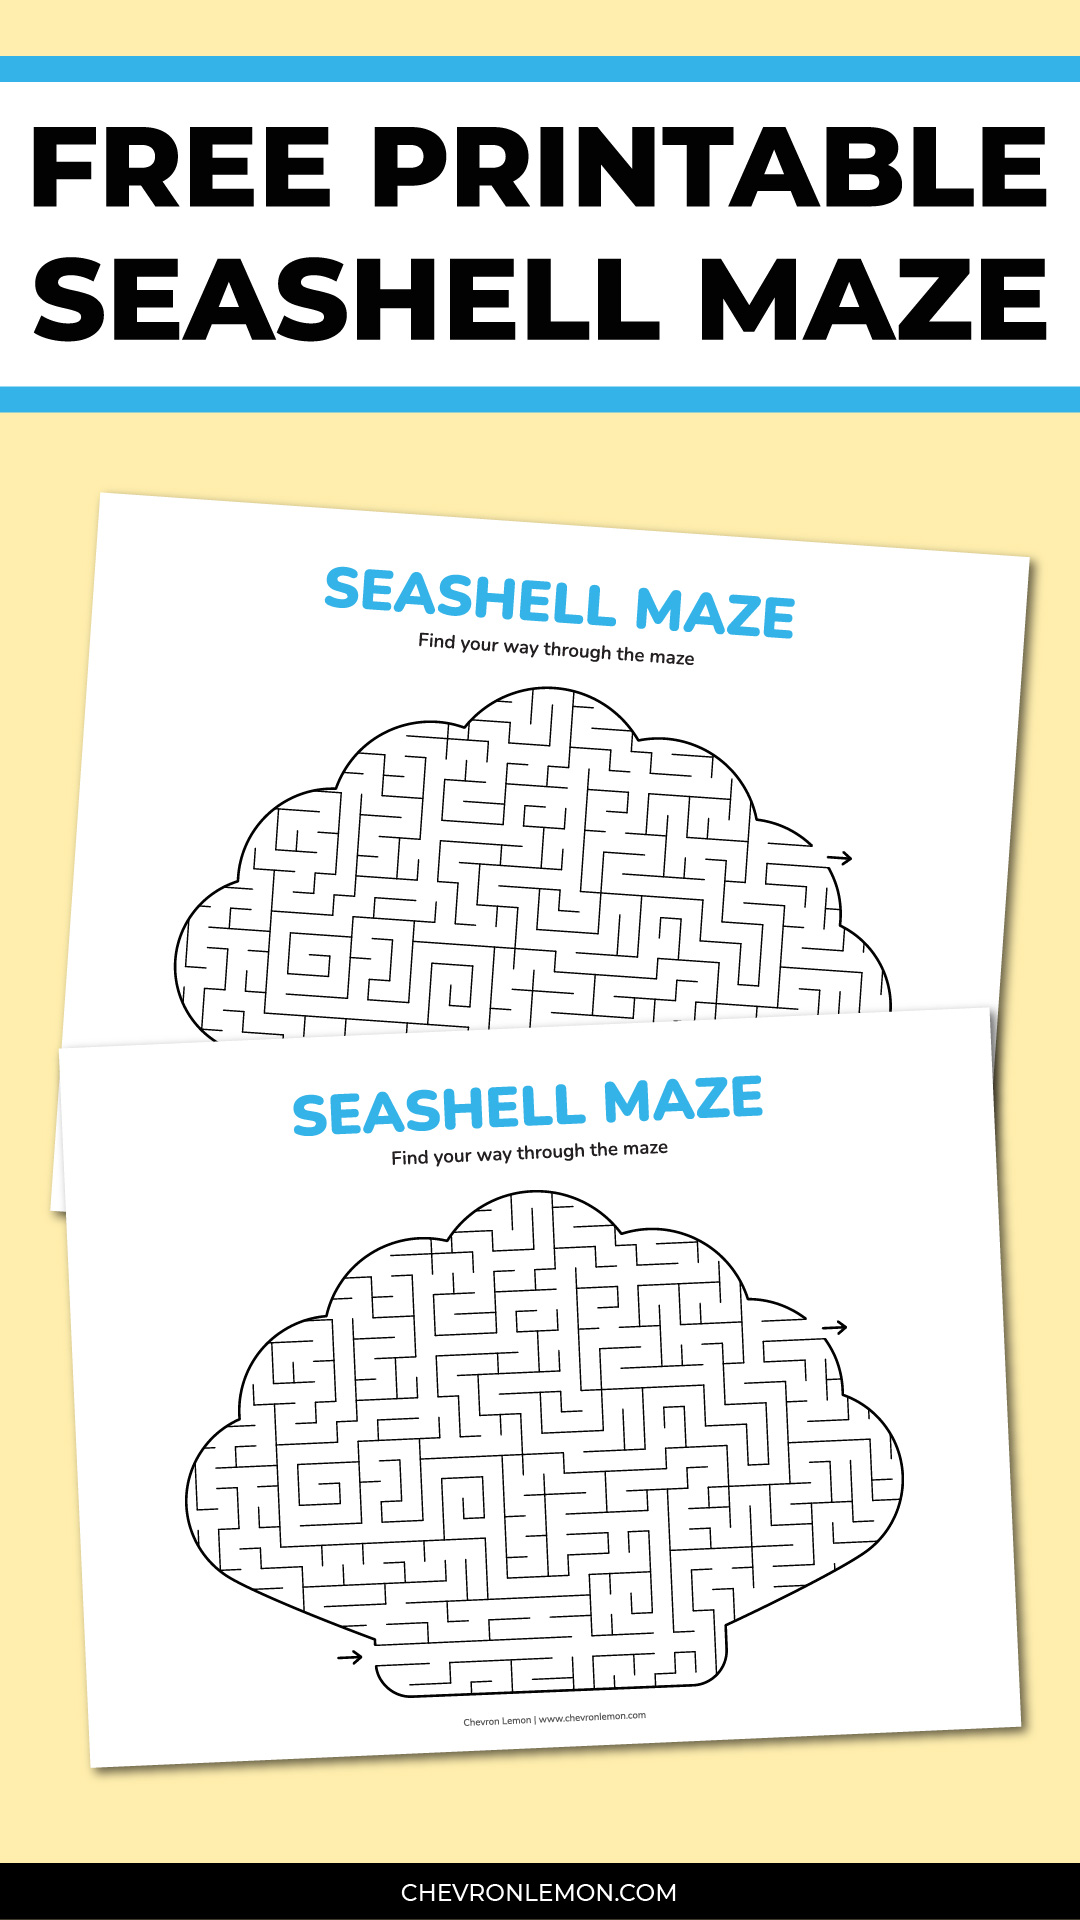 Seashell maze